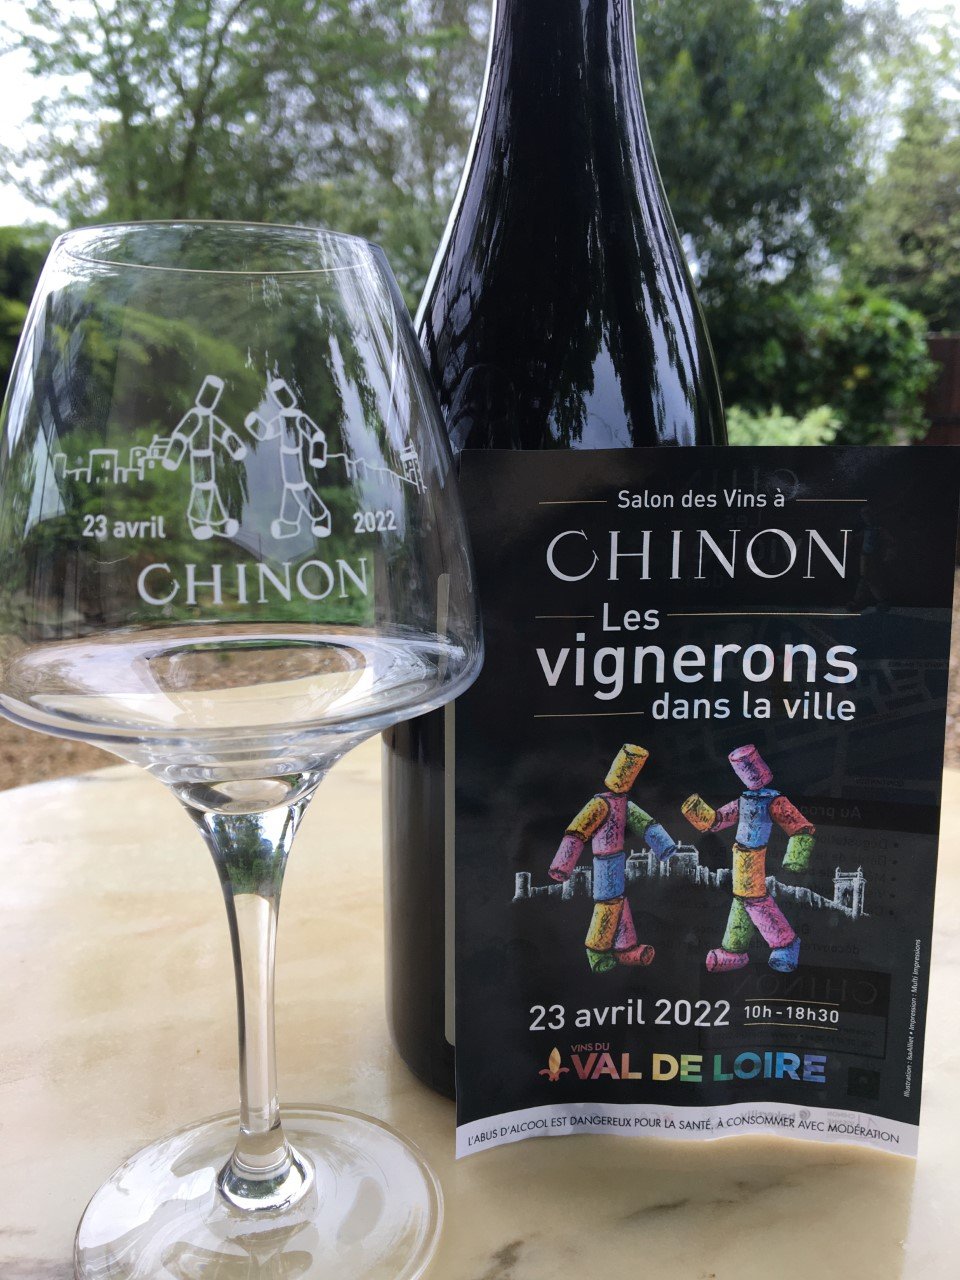 Chinon wine festival 4.jpeg